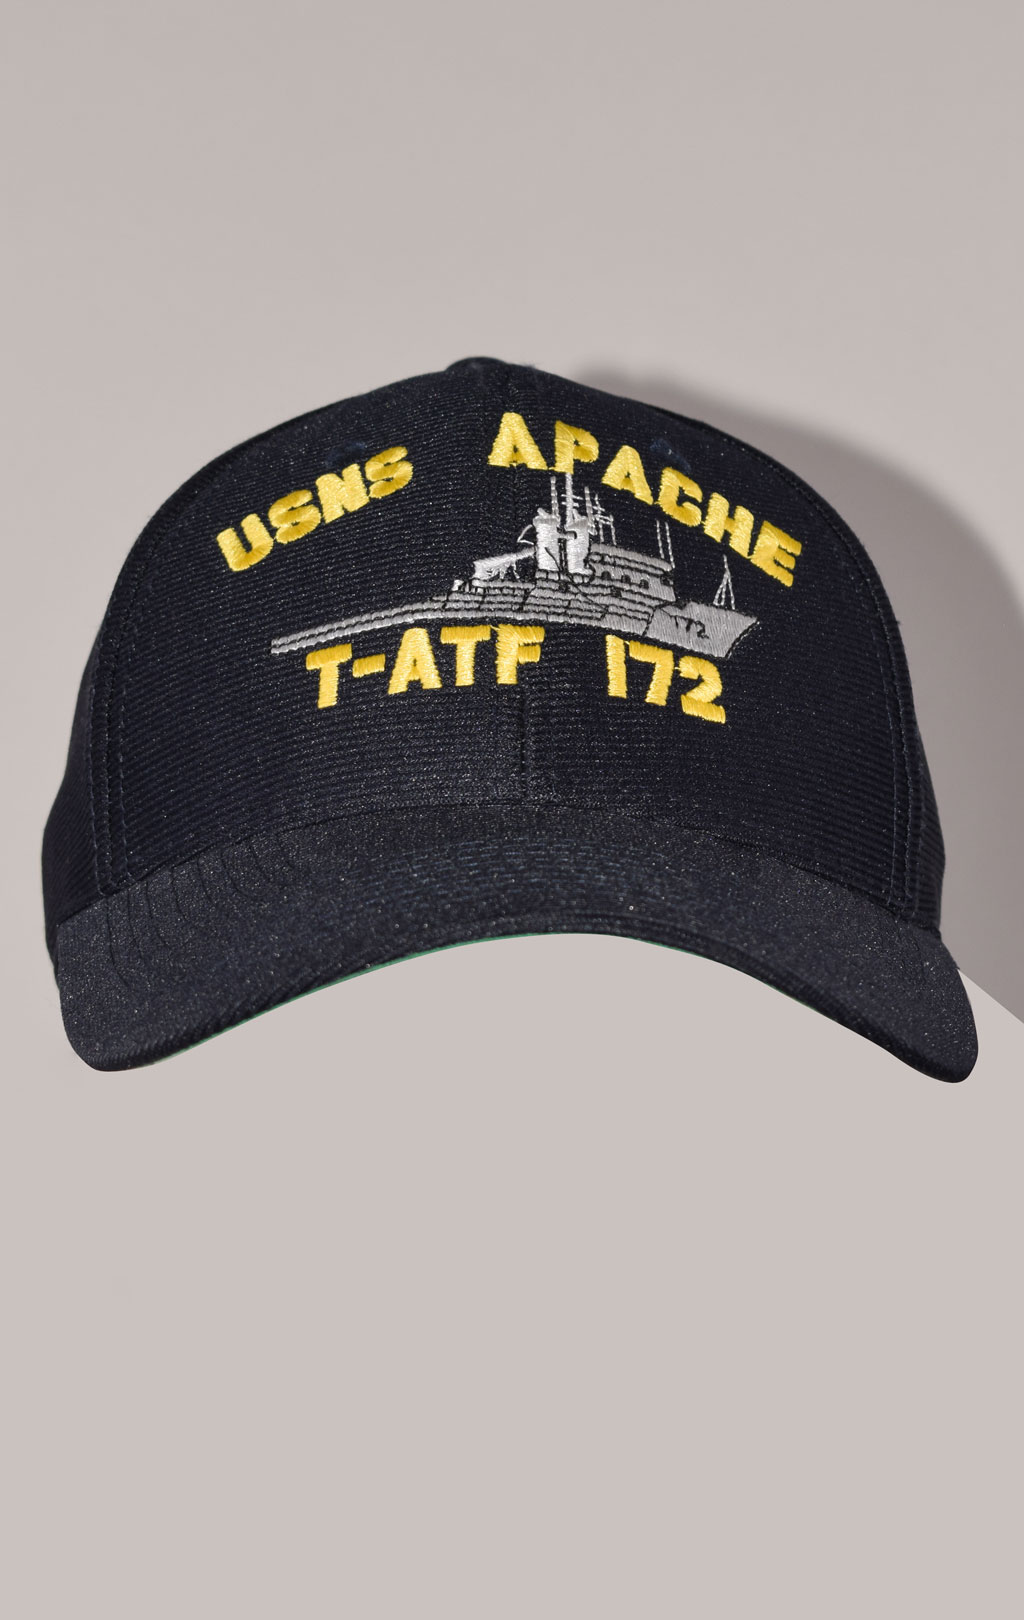 Бейсболка EC USNS APACHE T-ATF 172 navy 